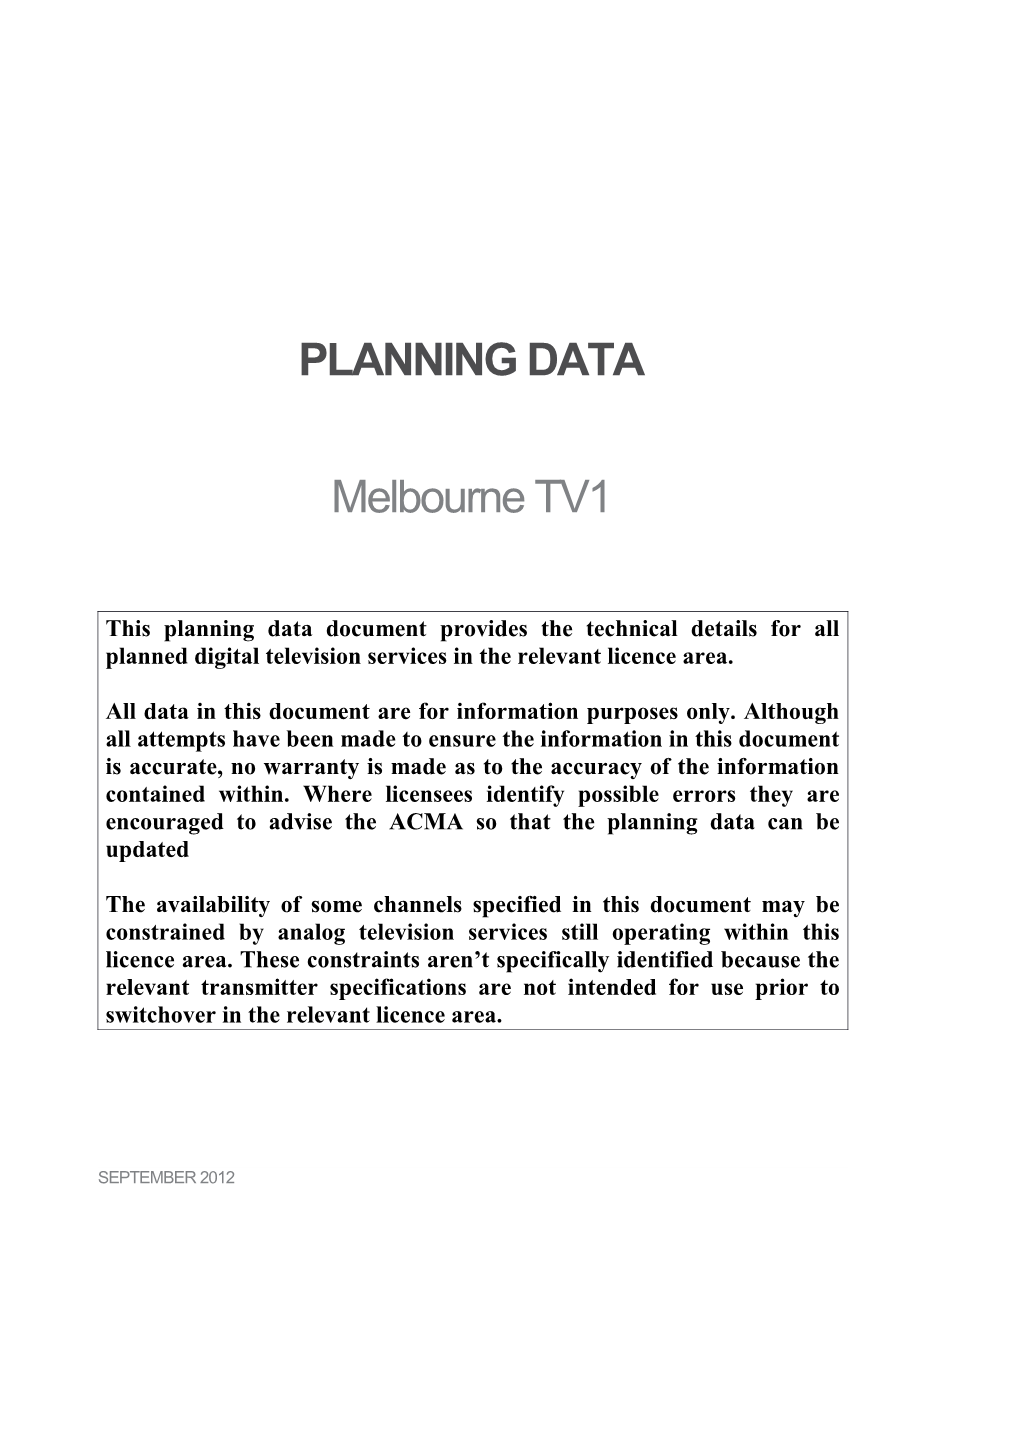 Melbourne Planning Data